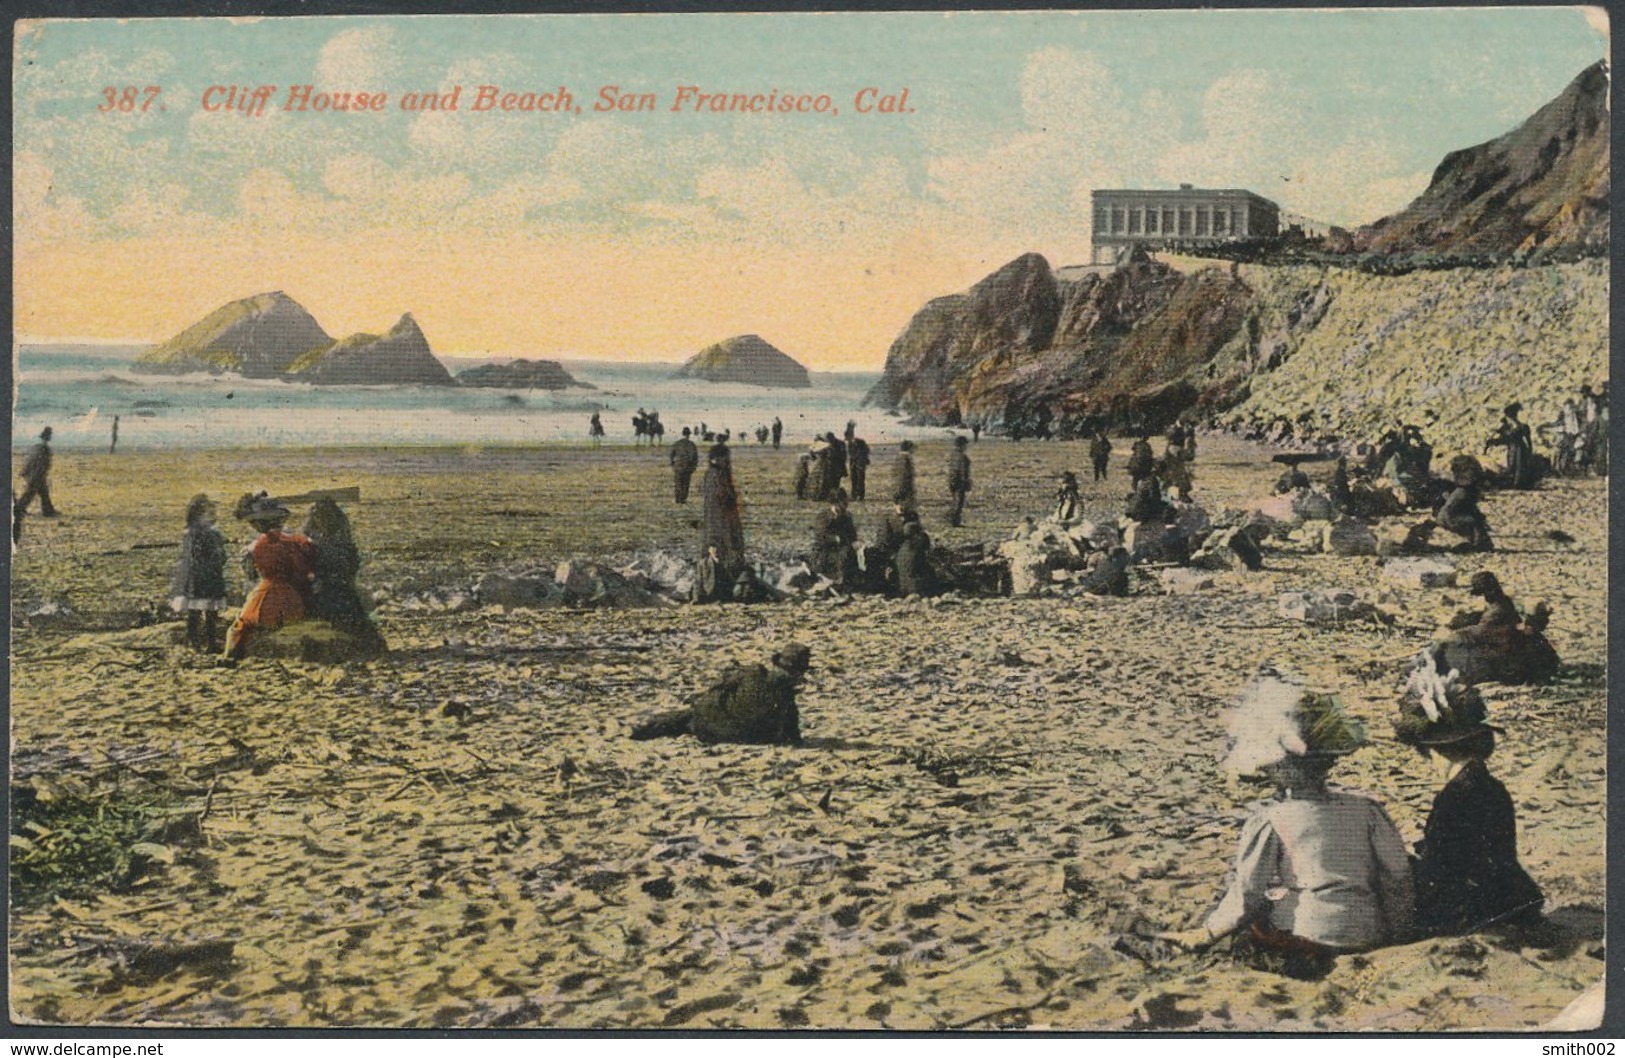 Cliff House And Beach, SAN FRANCISCO - San Francisco